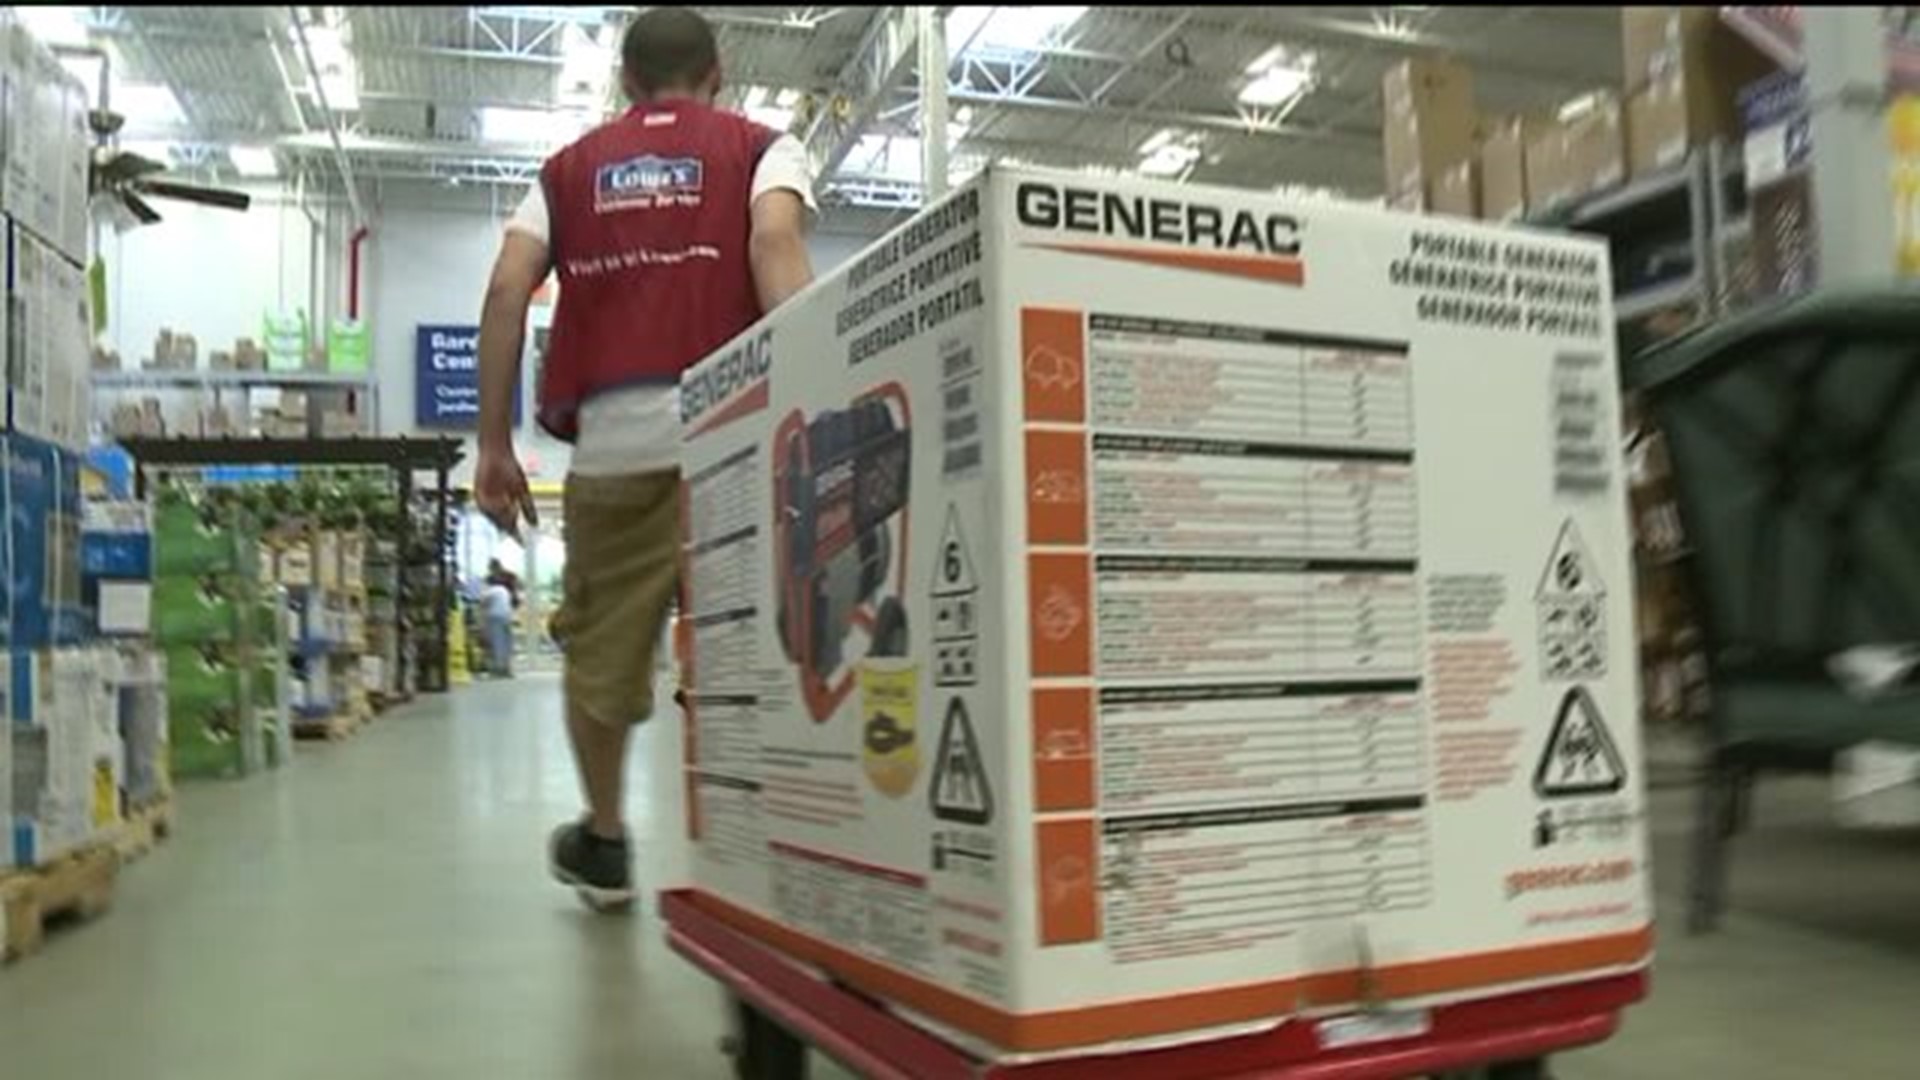 Stores Struggle to Keep Generators on Shelves After Storm